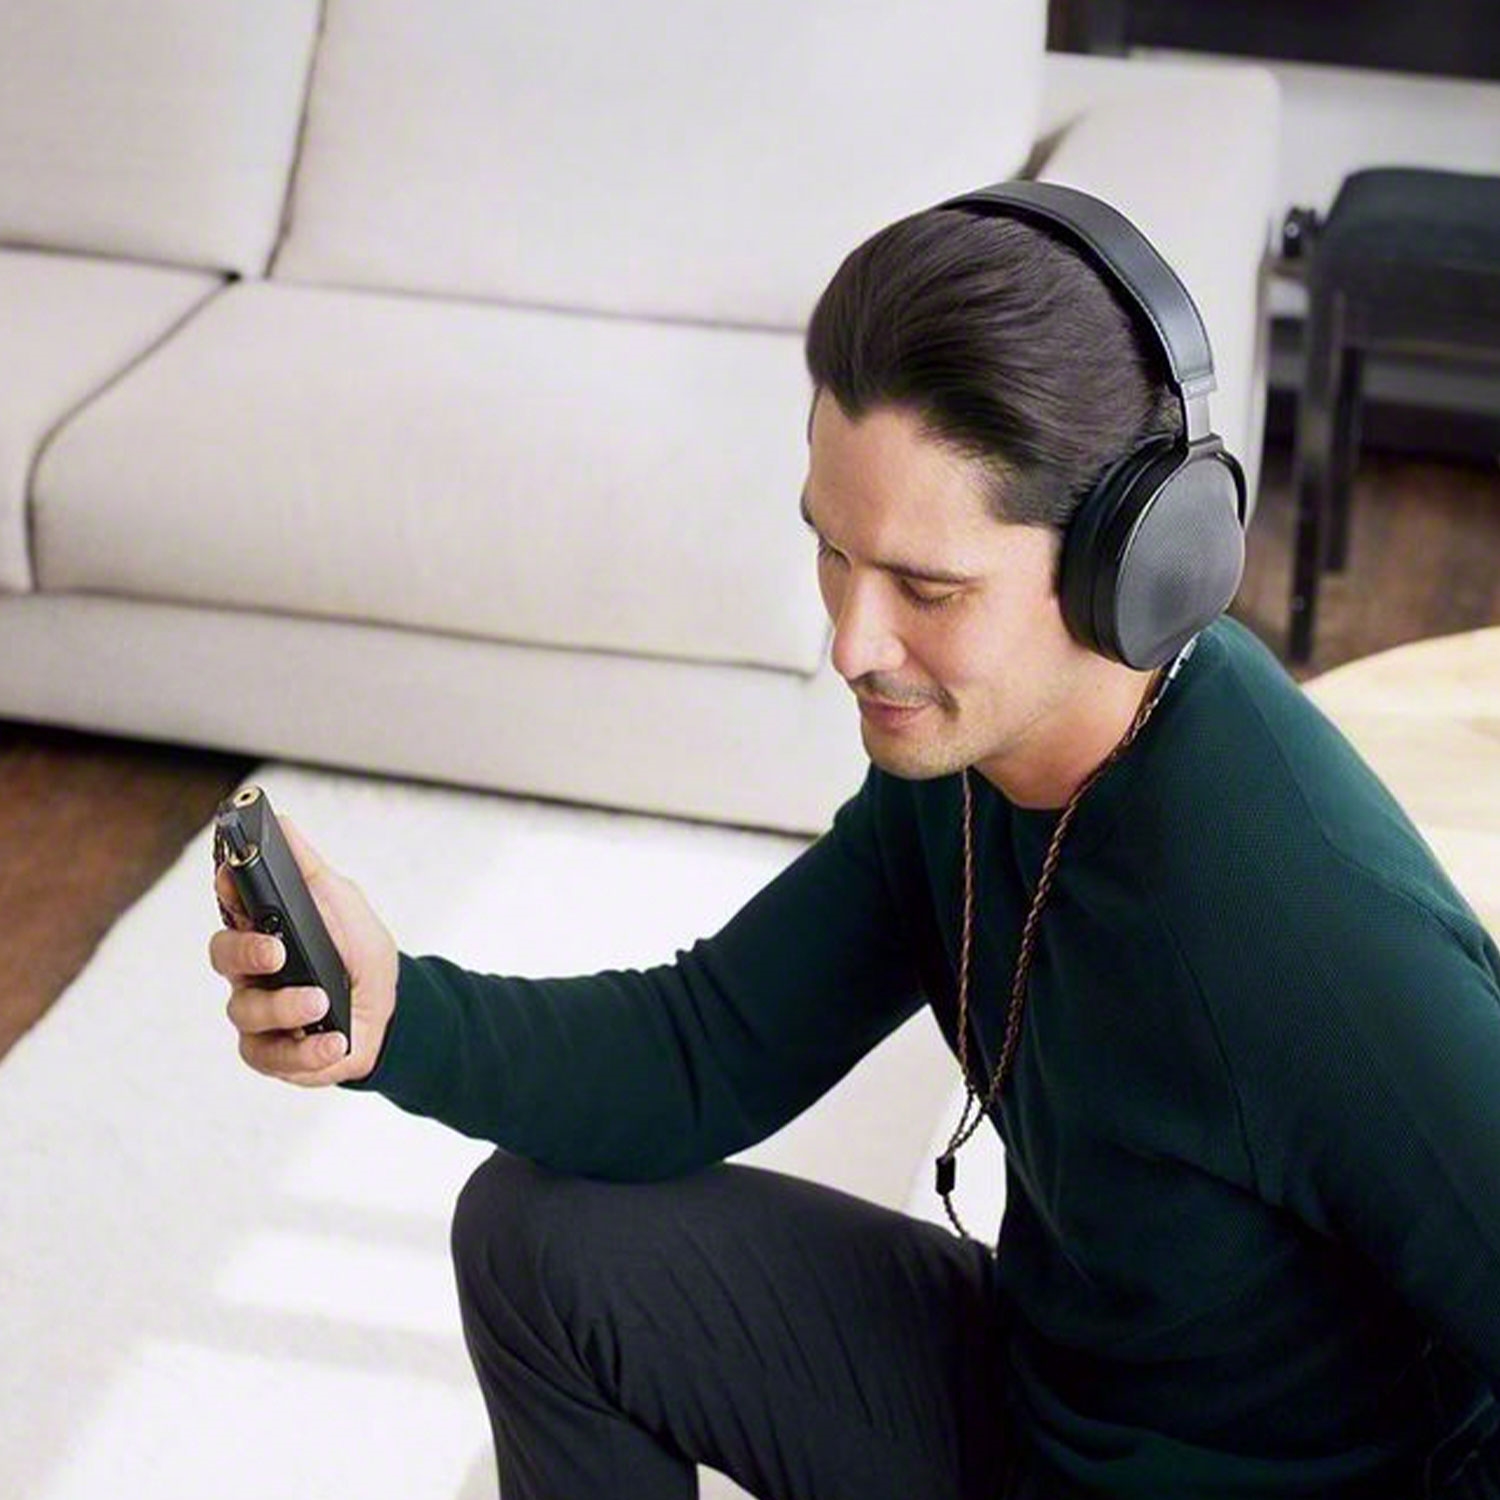 Sony NW-WM1A – en Walkman för audiofila öron